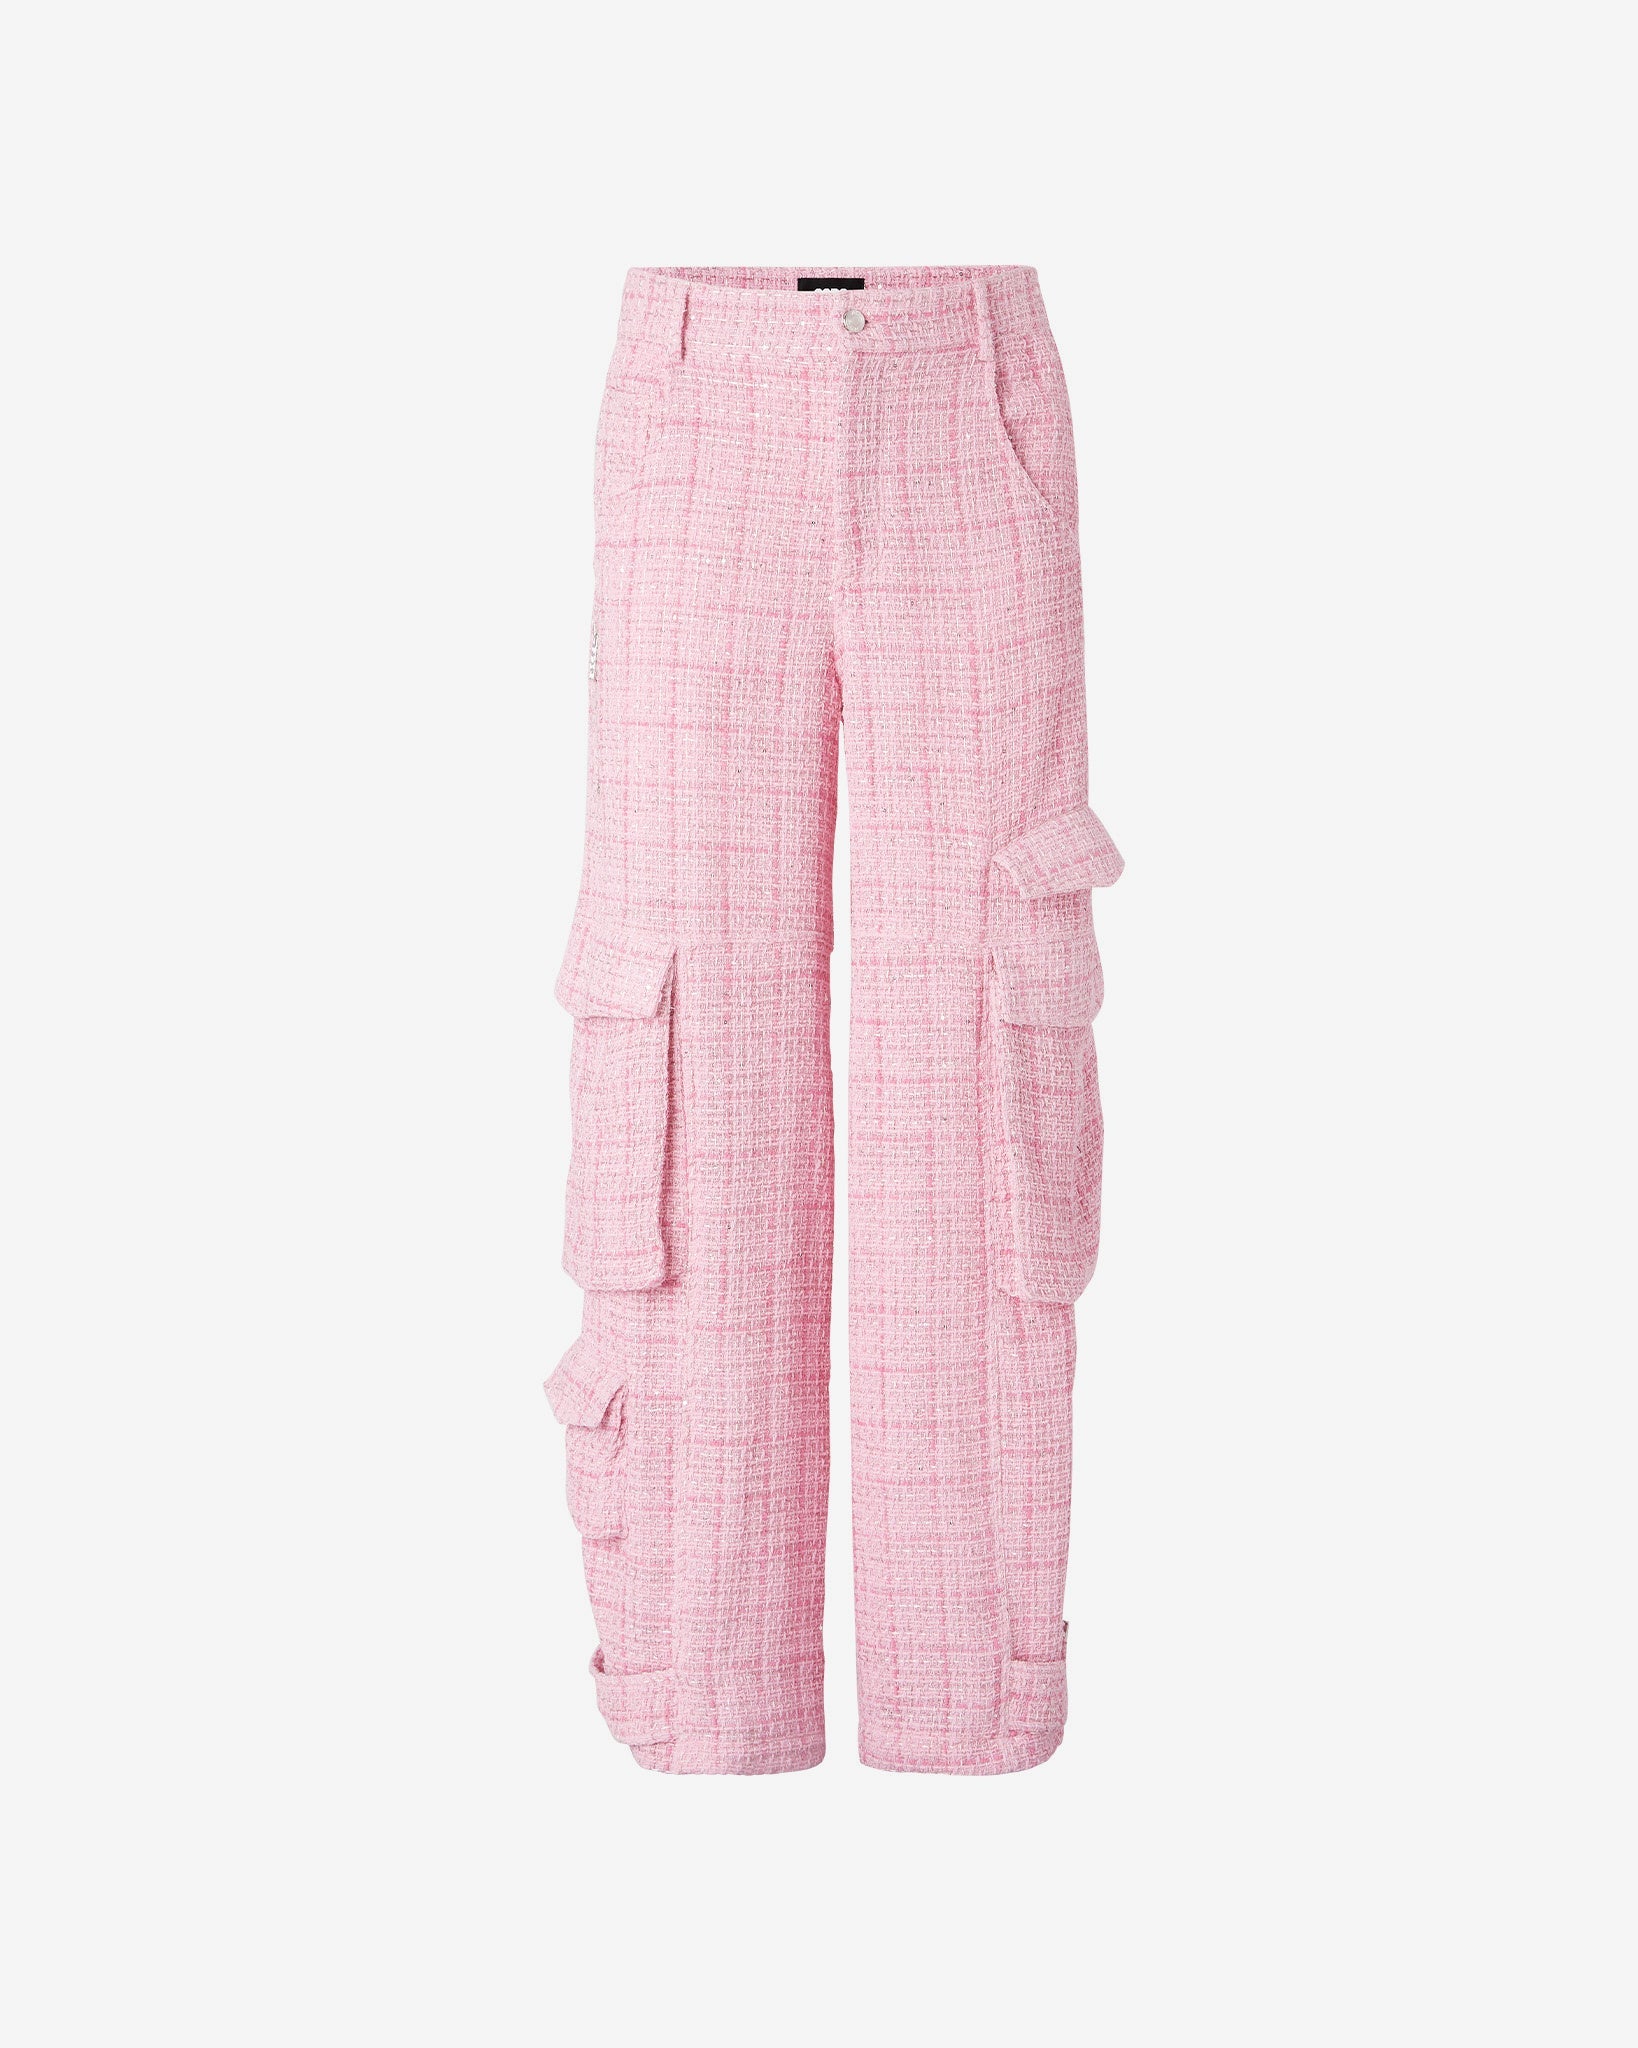 Women's trousers Odurock - PEONY STRIPES Pink - E23